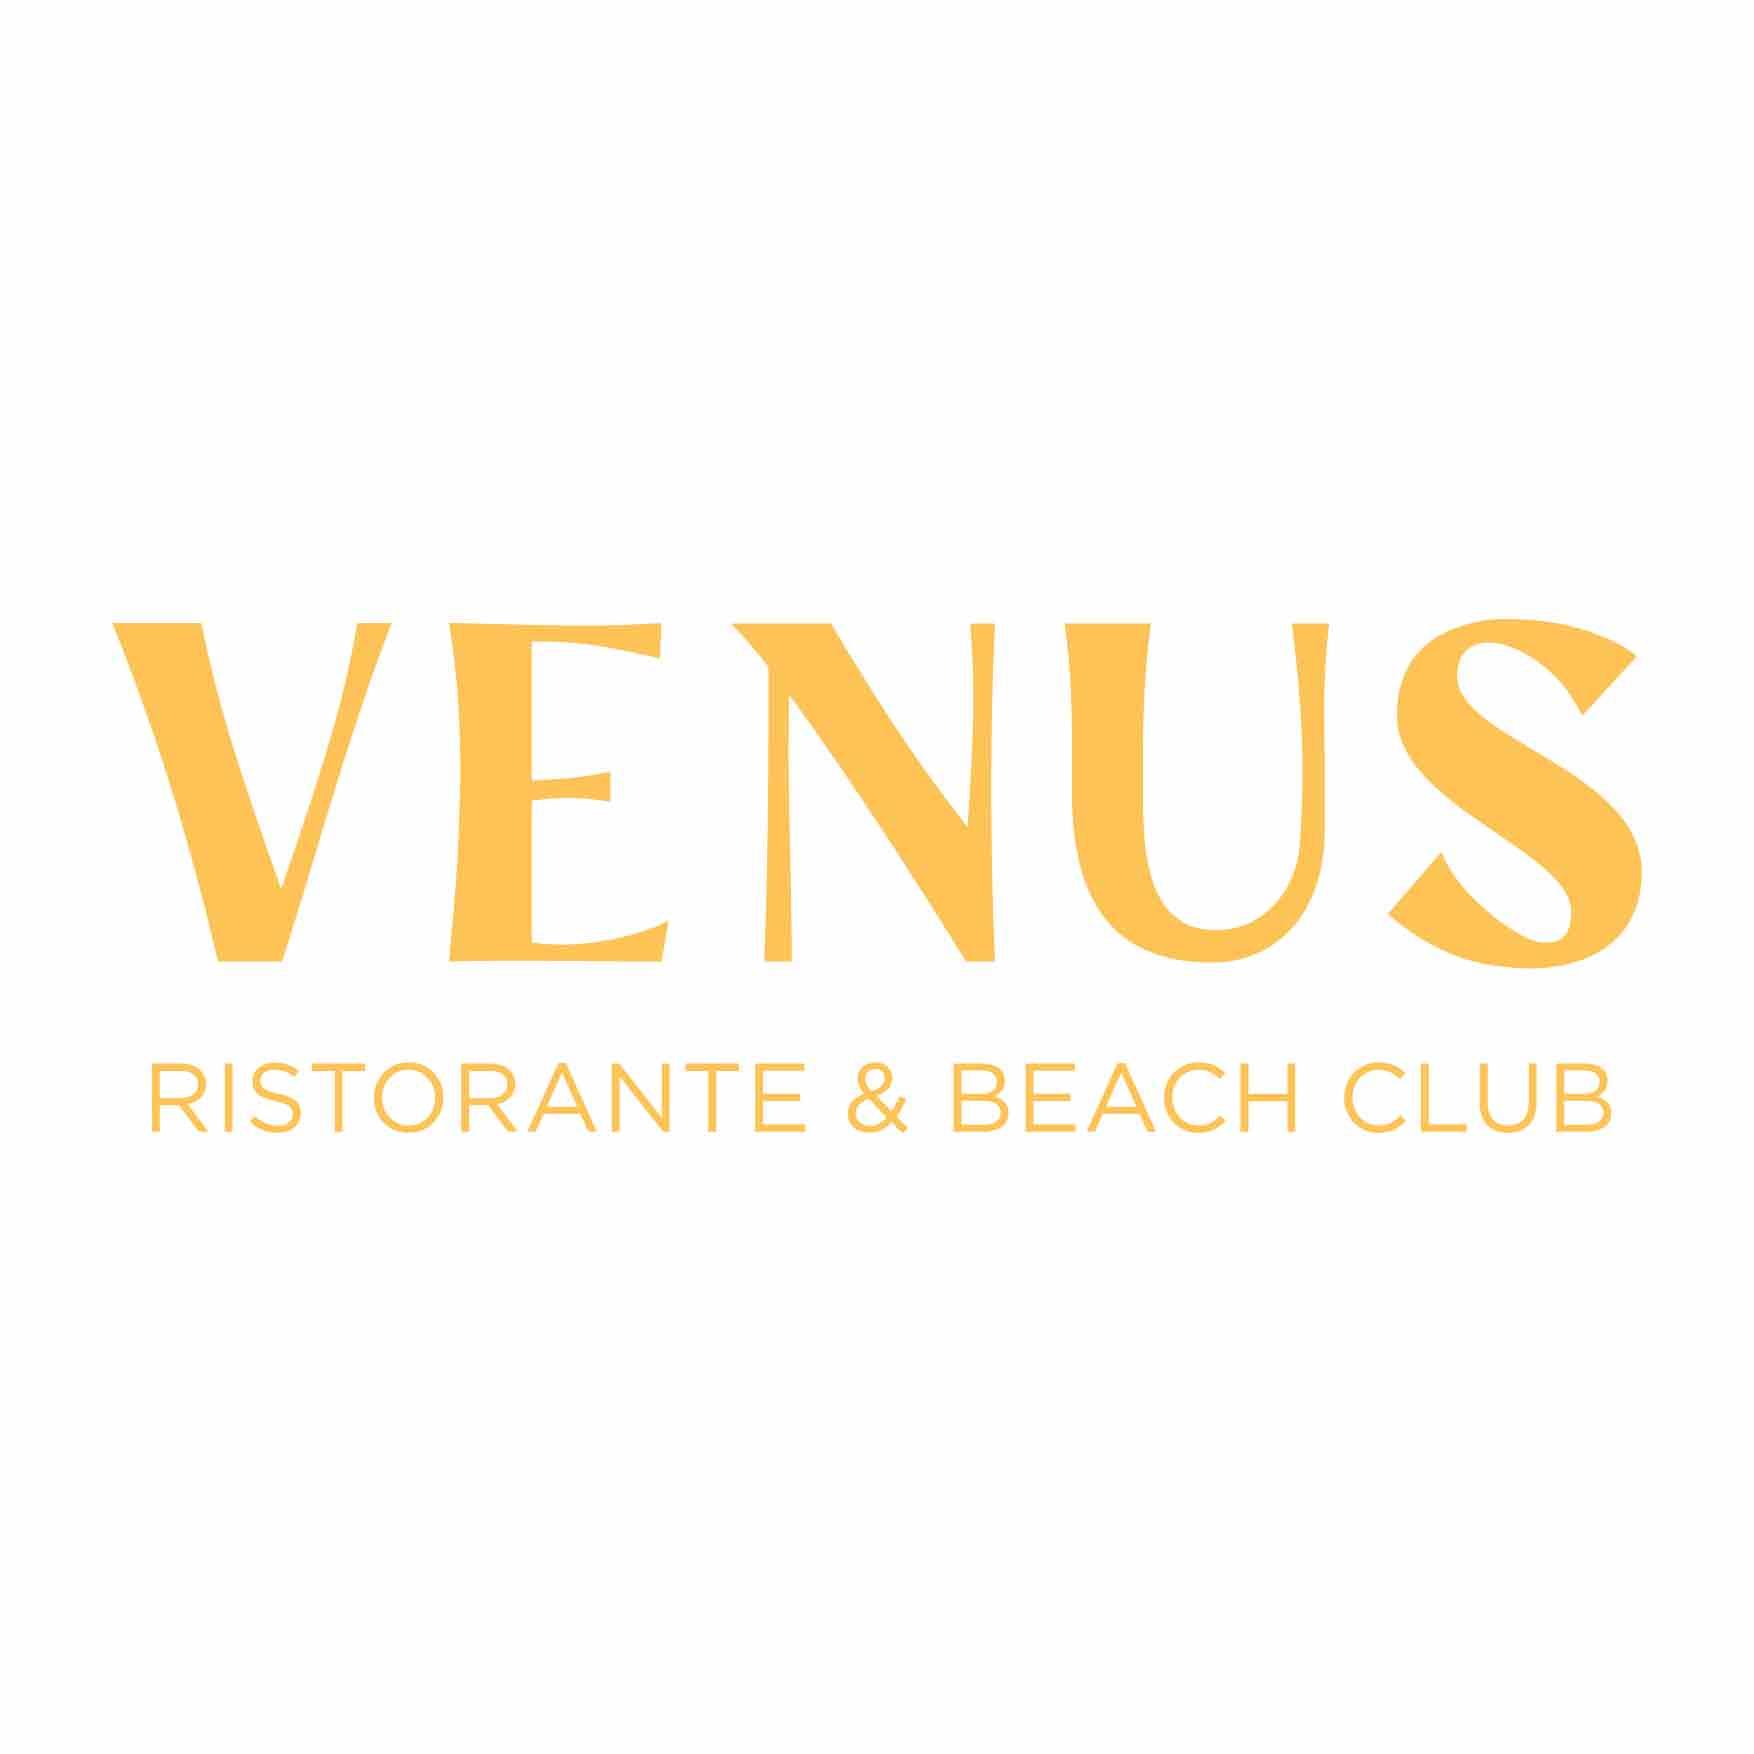 Venus Ristorante and Beach Club